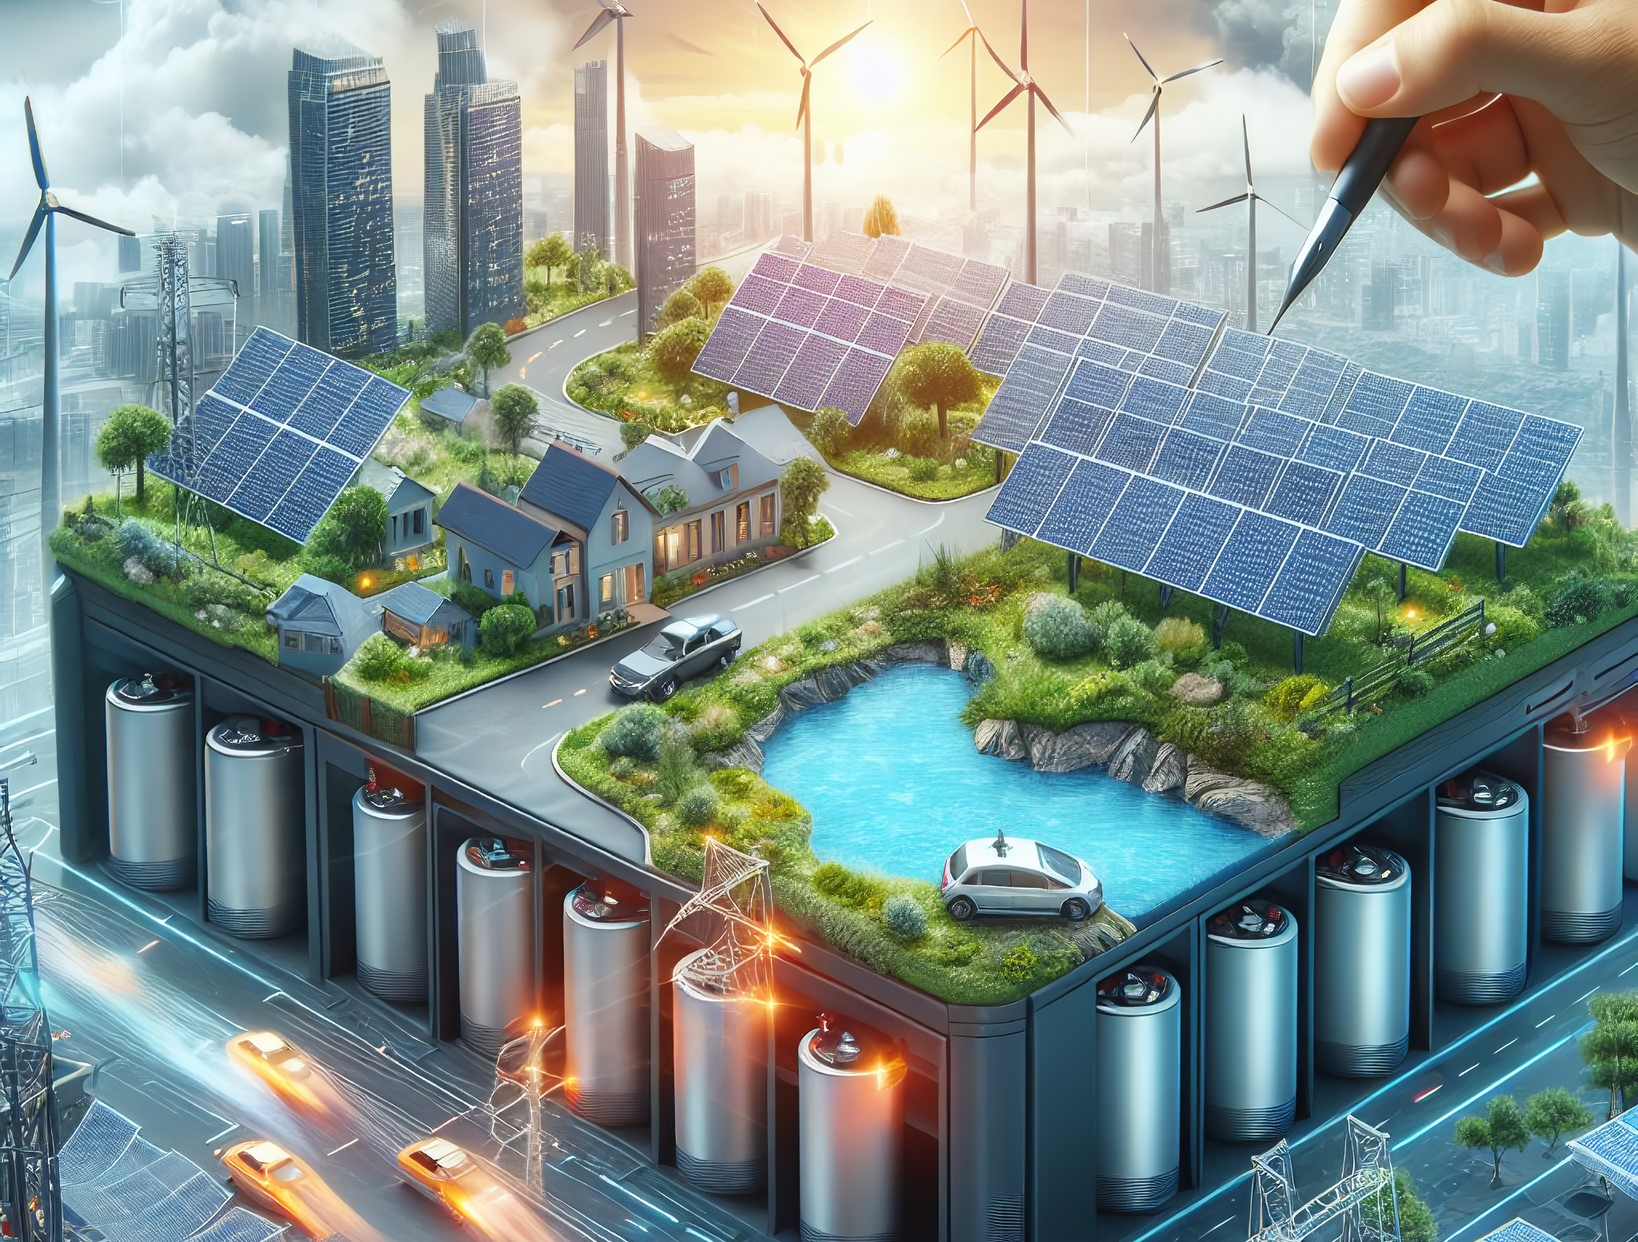 technologies used to generate hybrid renewable energy